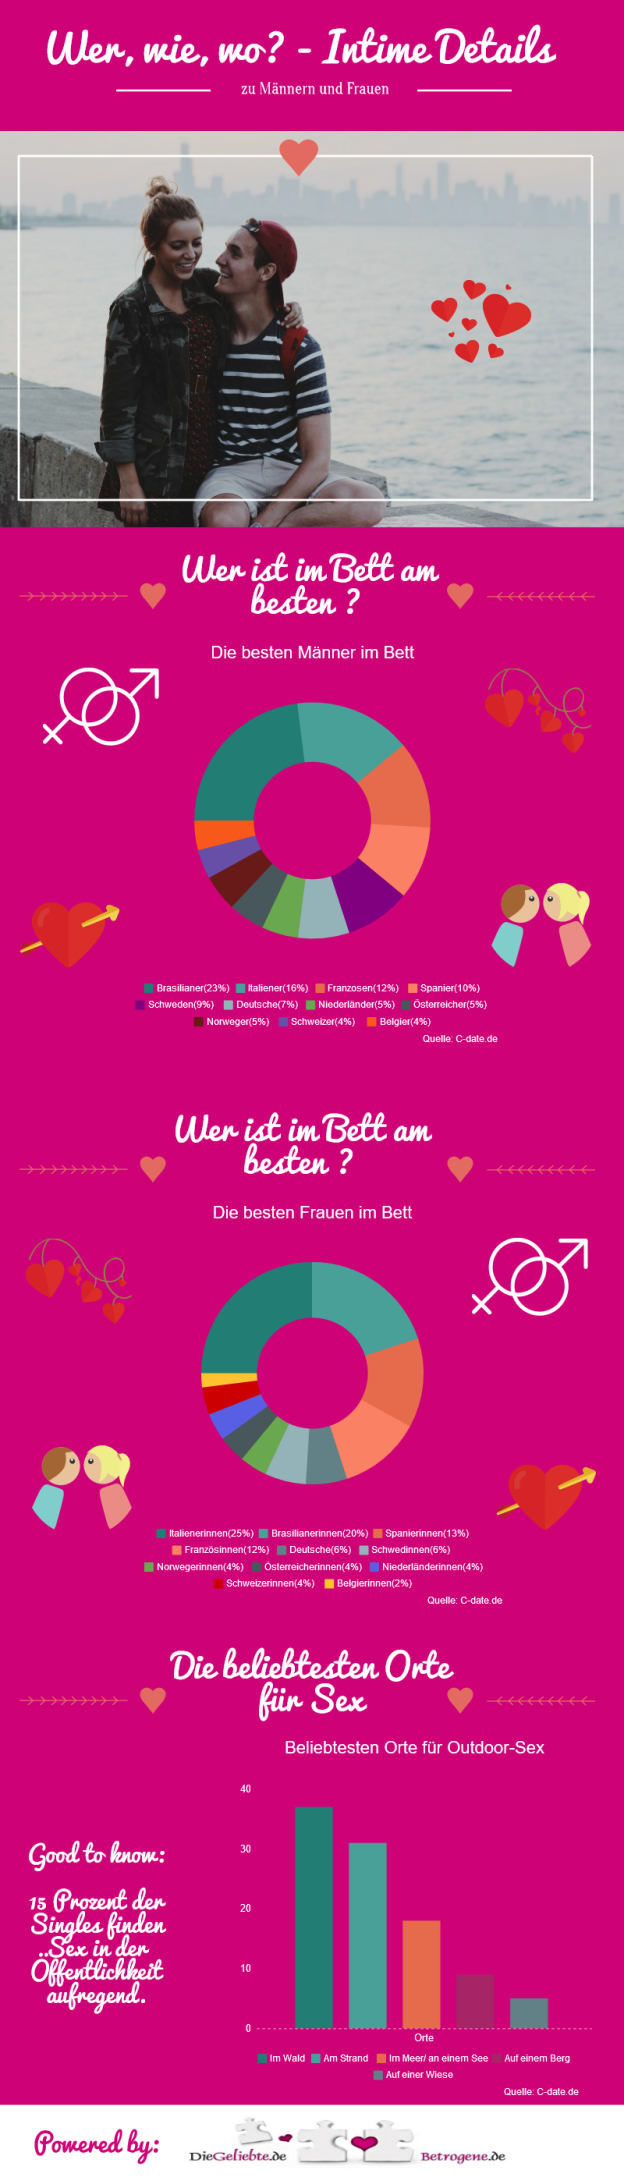 Infografik darber, ob Mnner oder Frauen besser im Bett sind.